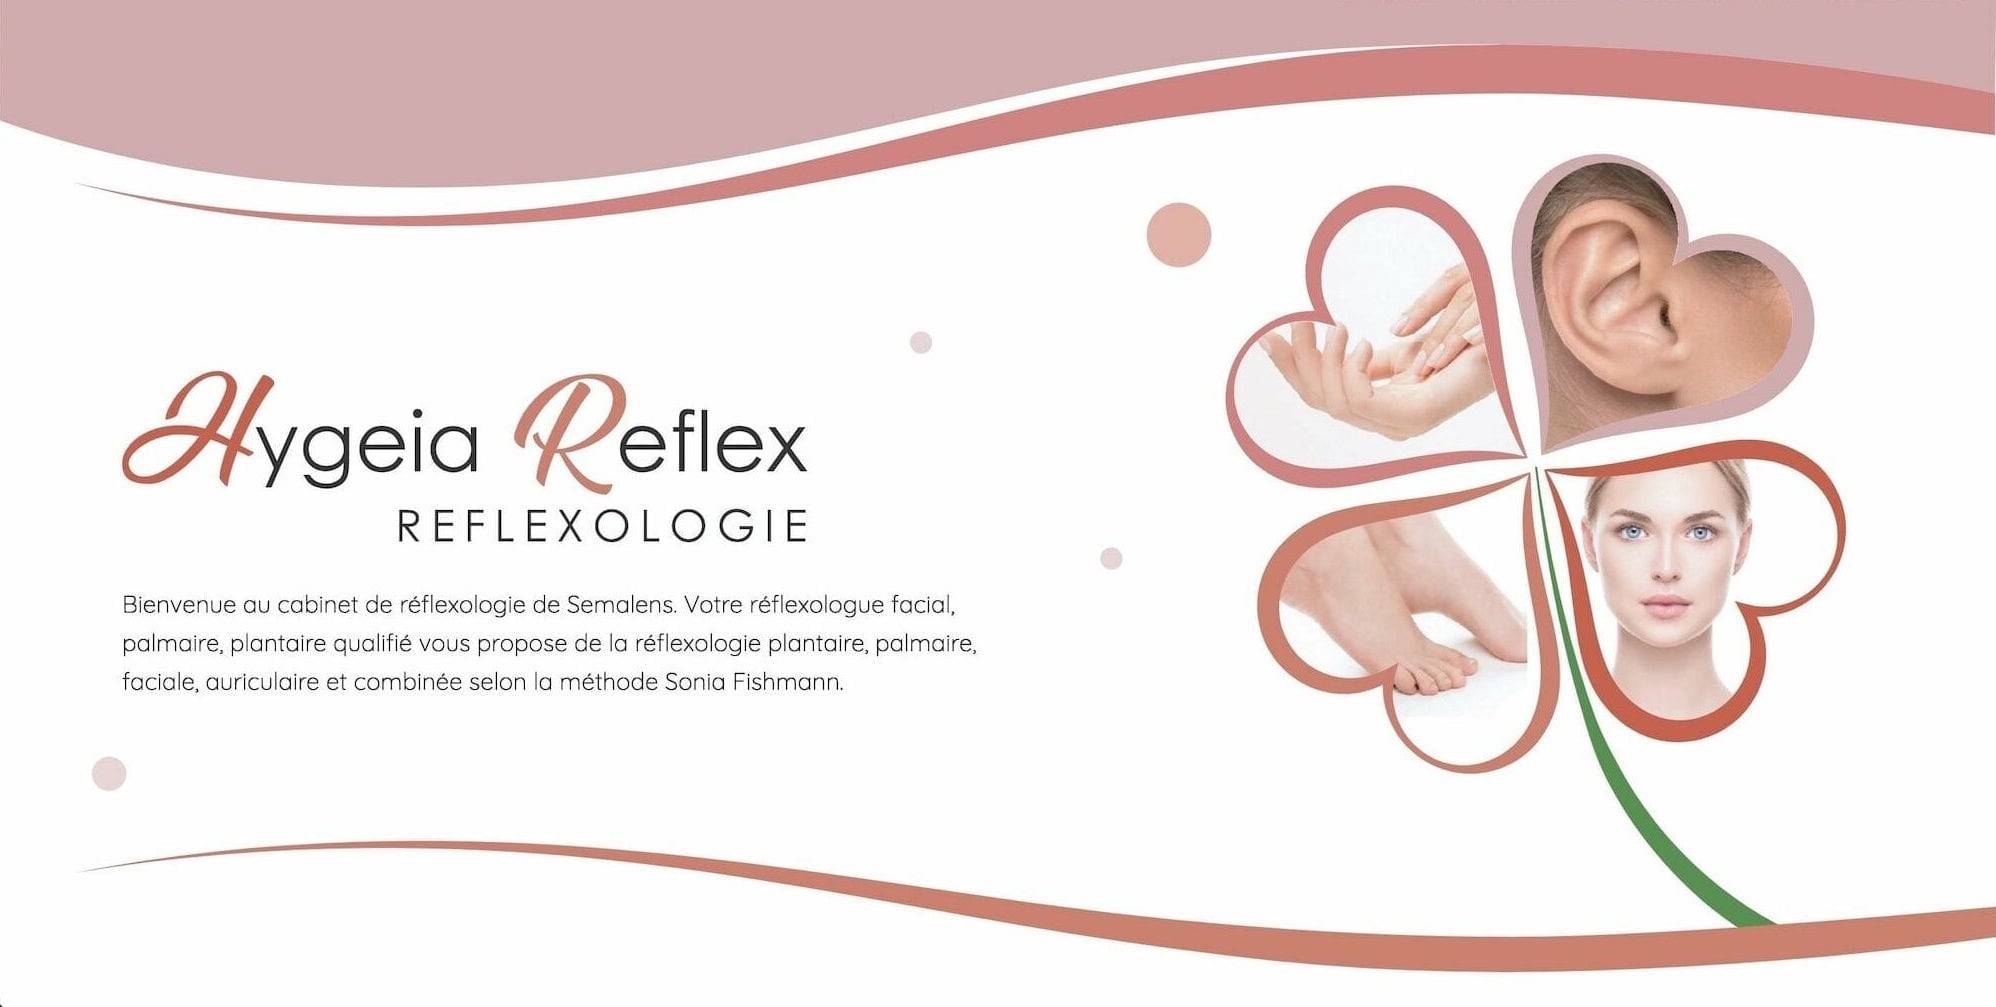 Hygeia Reflex - Julien Webotop